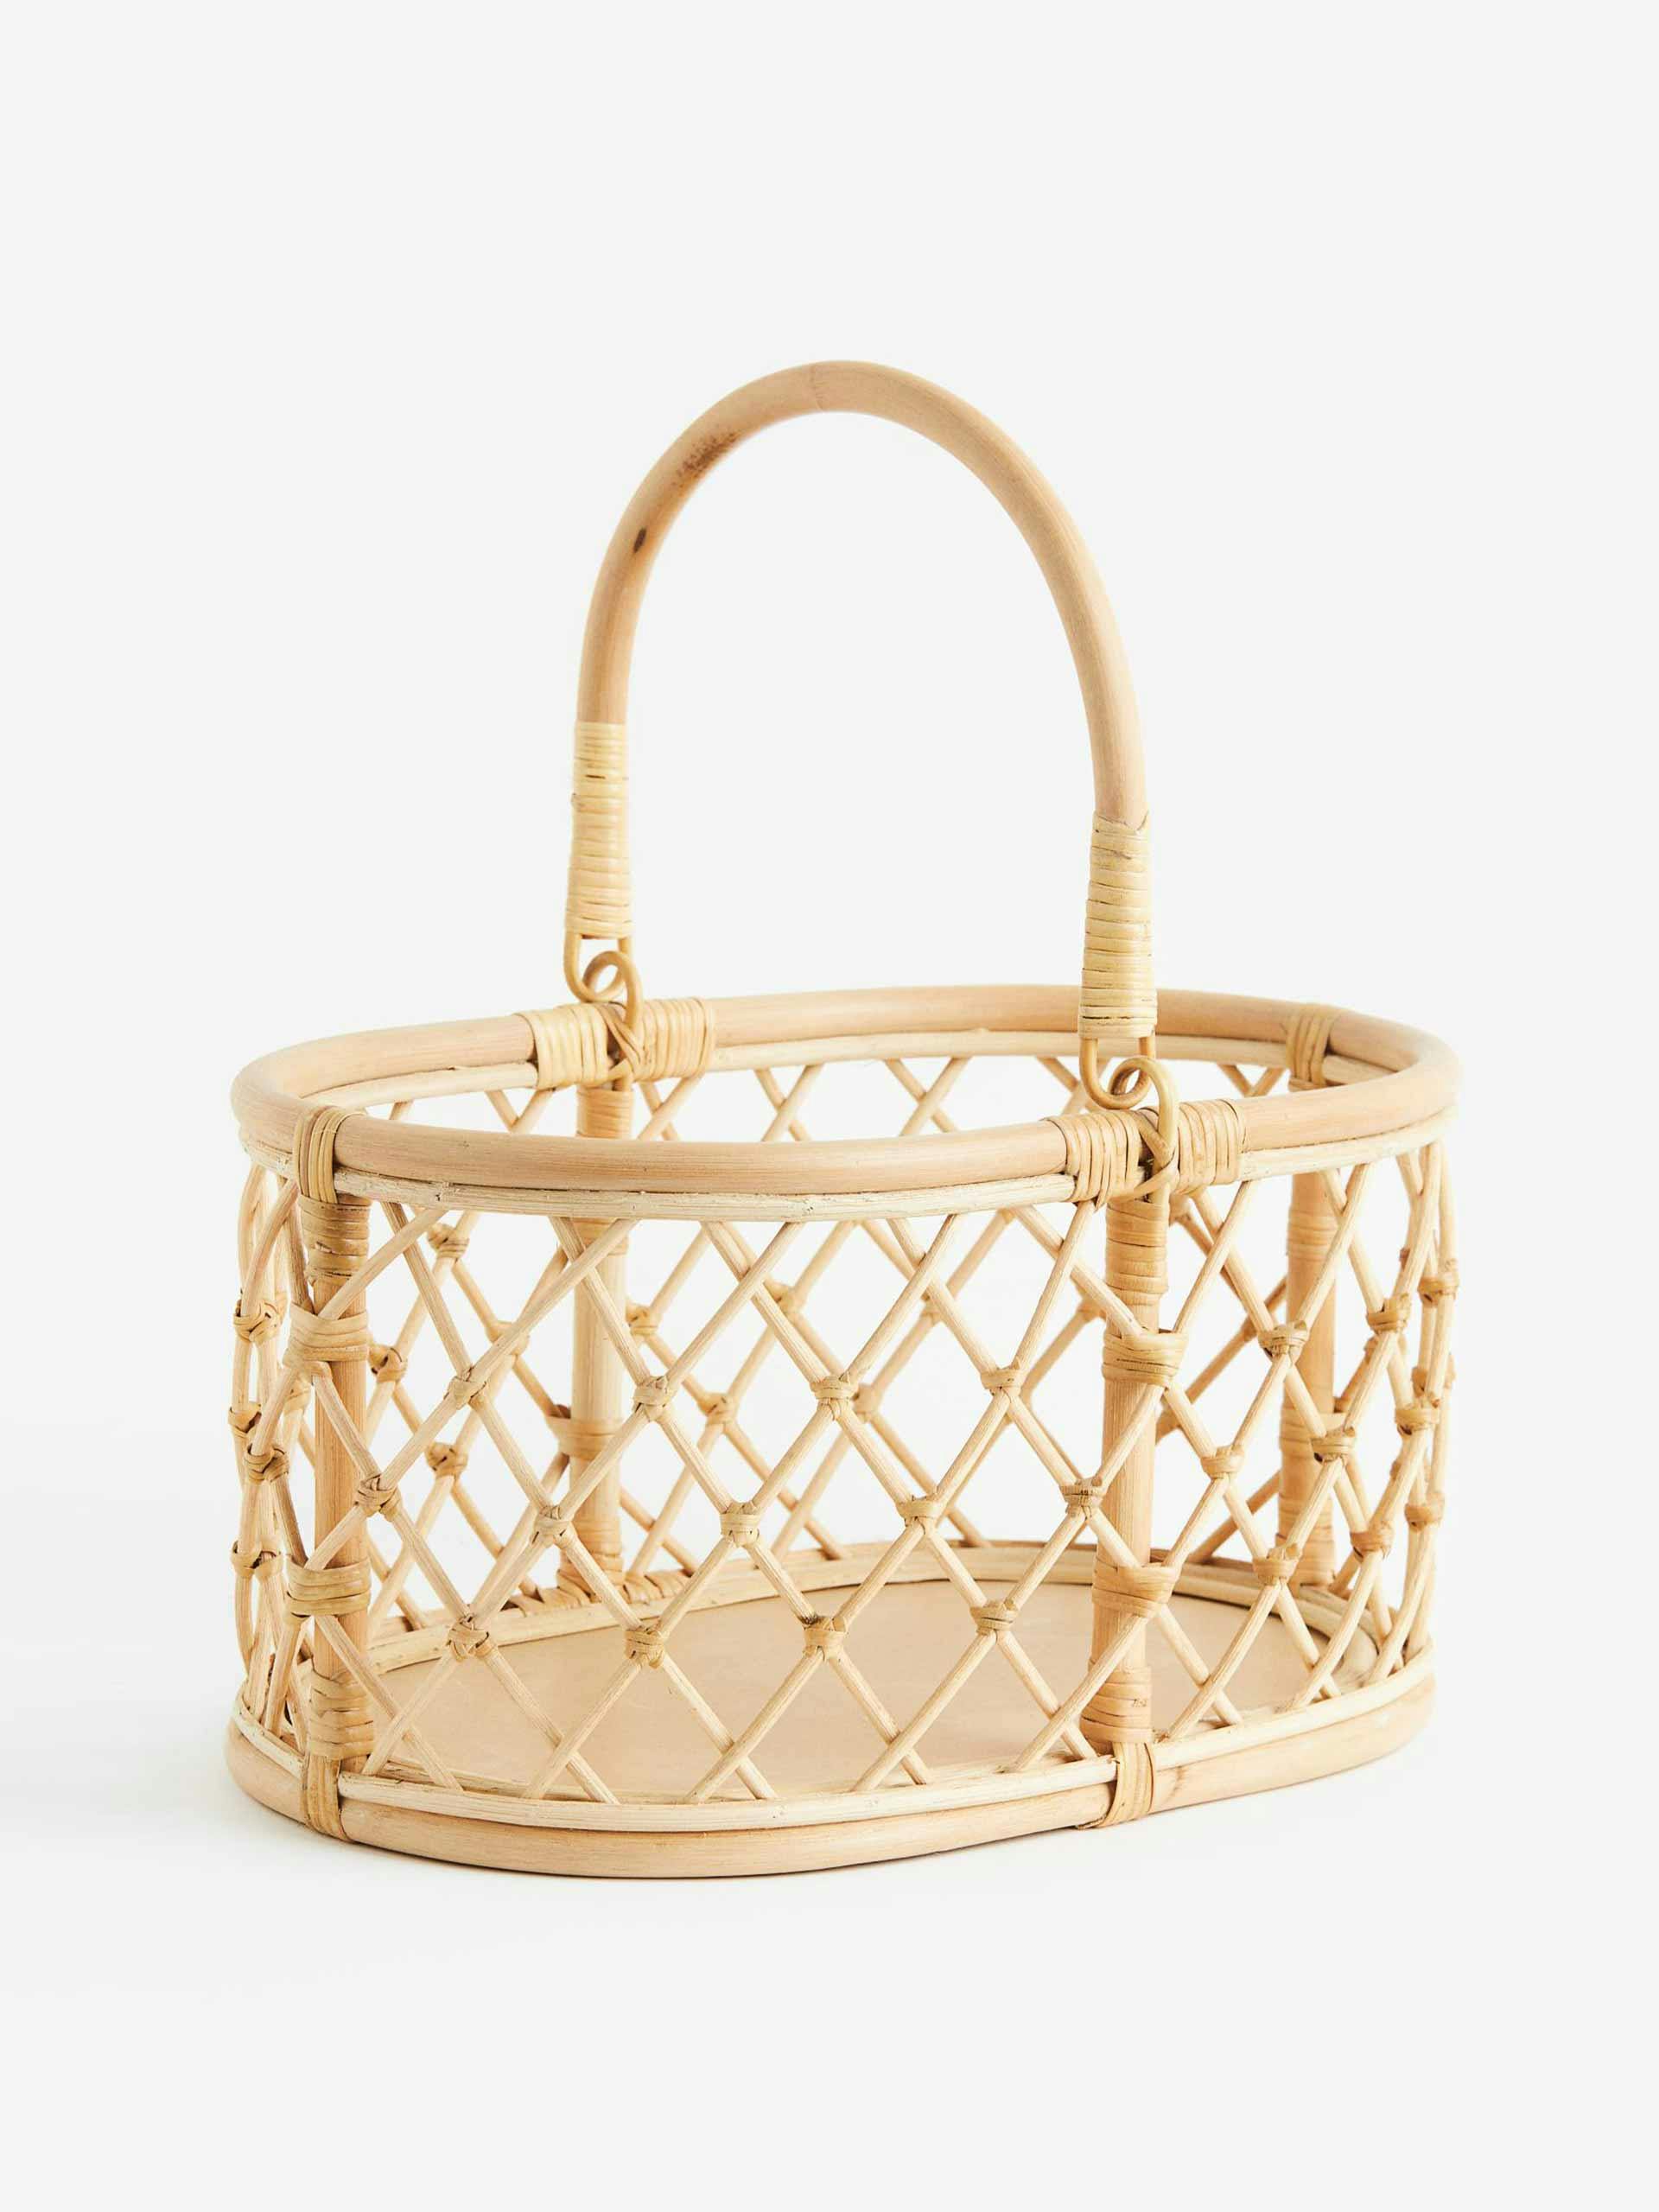 Rattan picnic basket